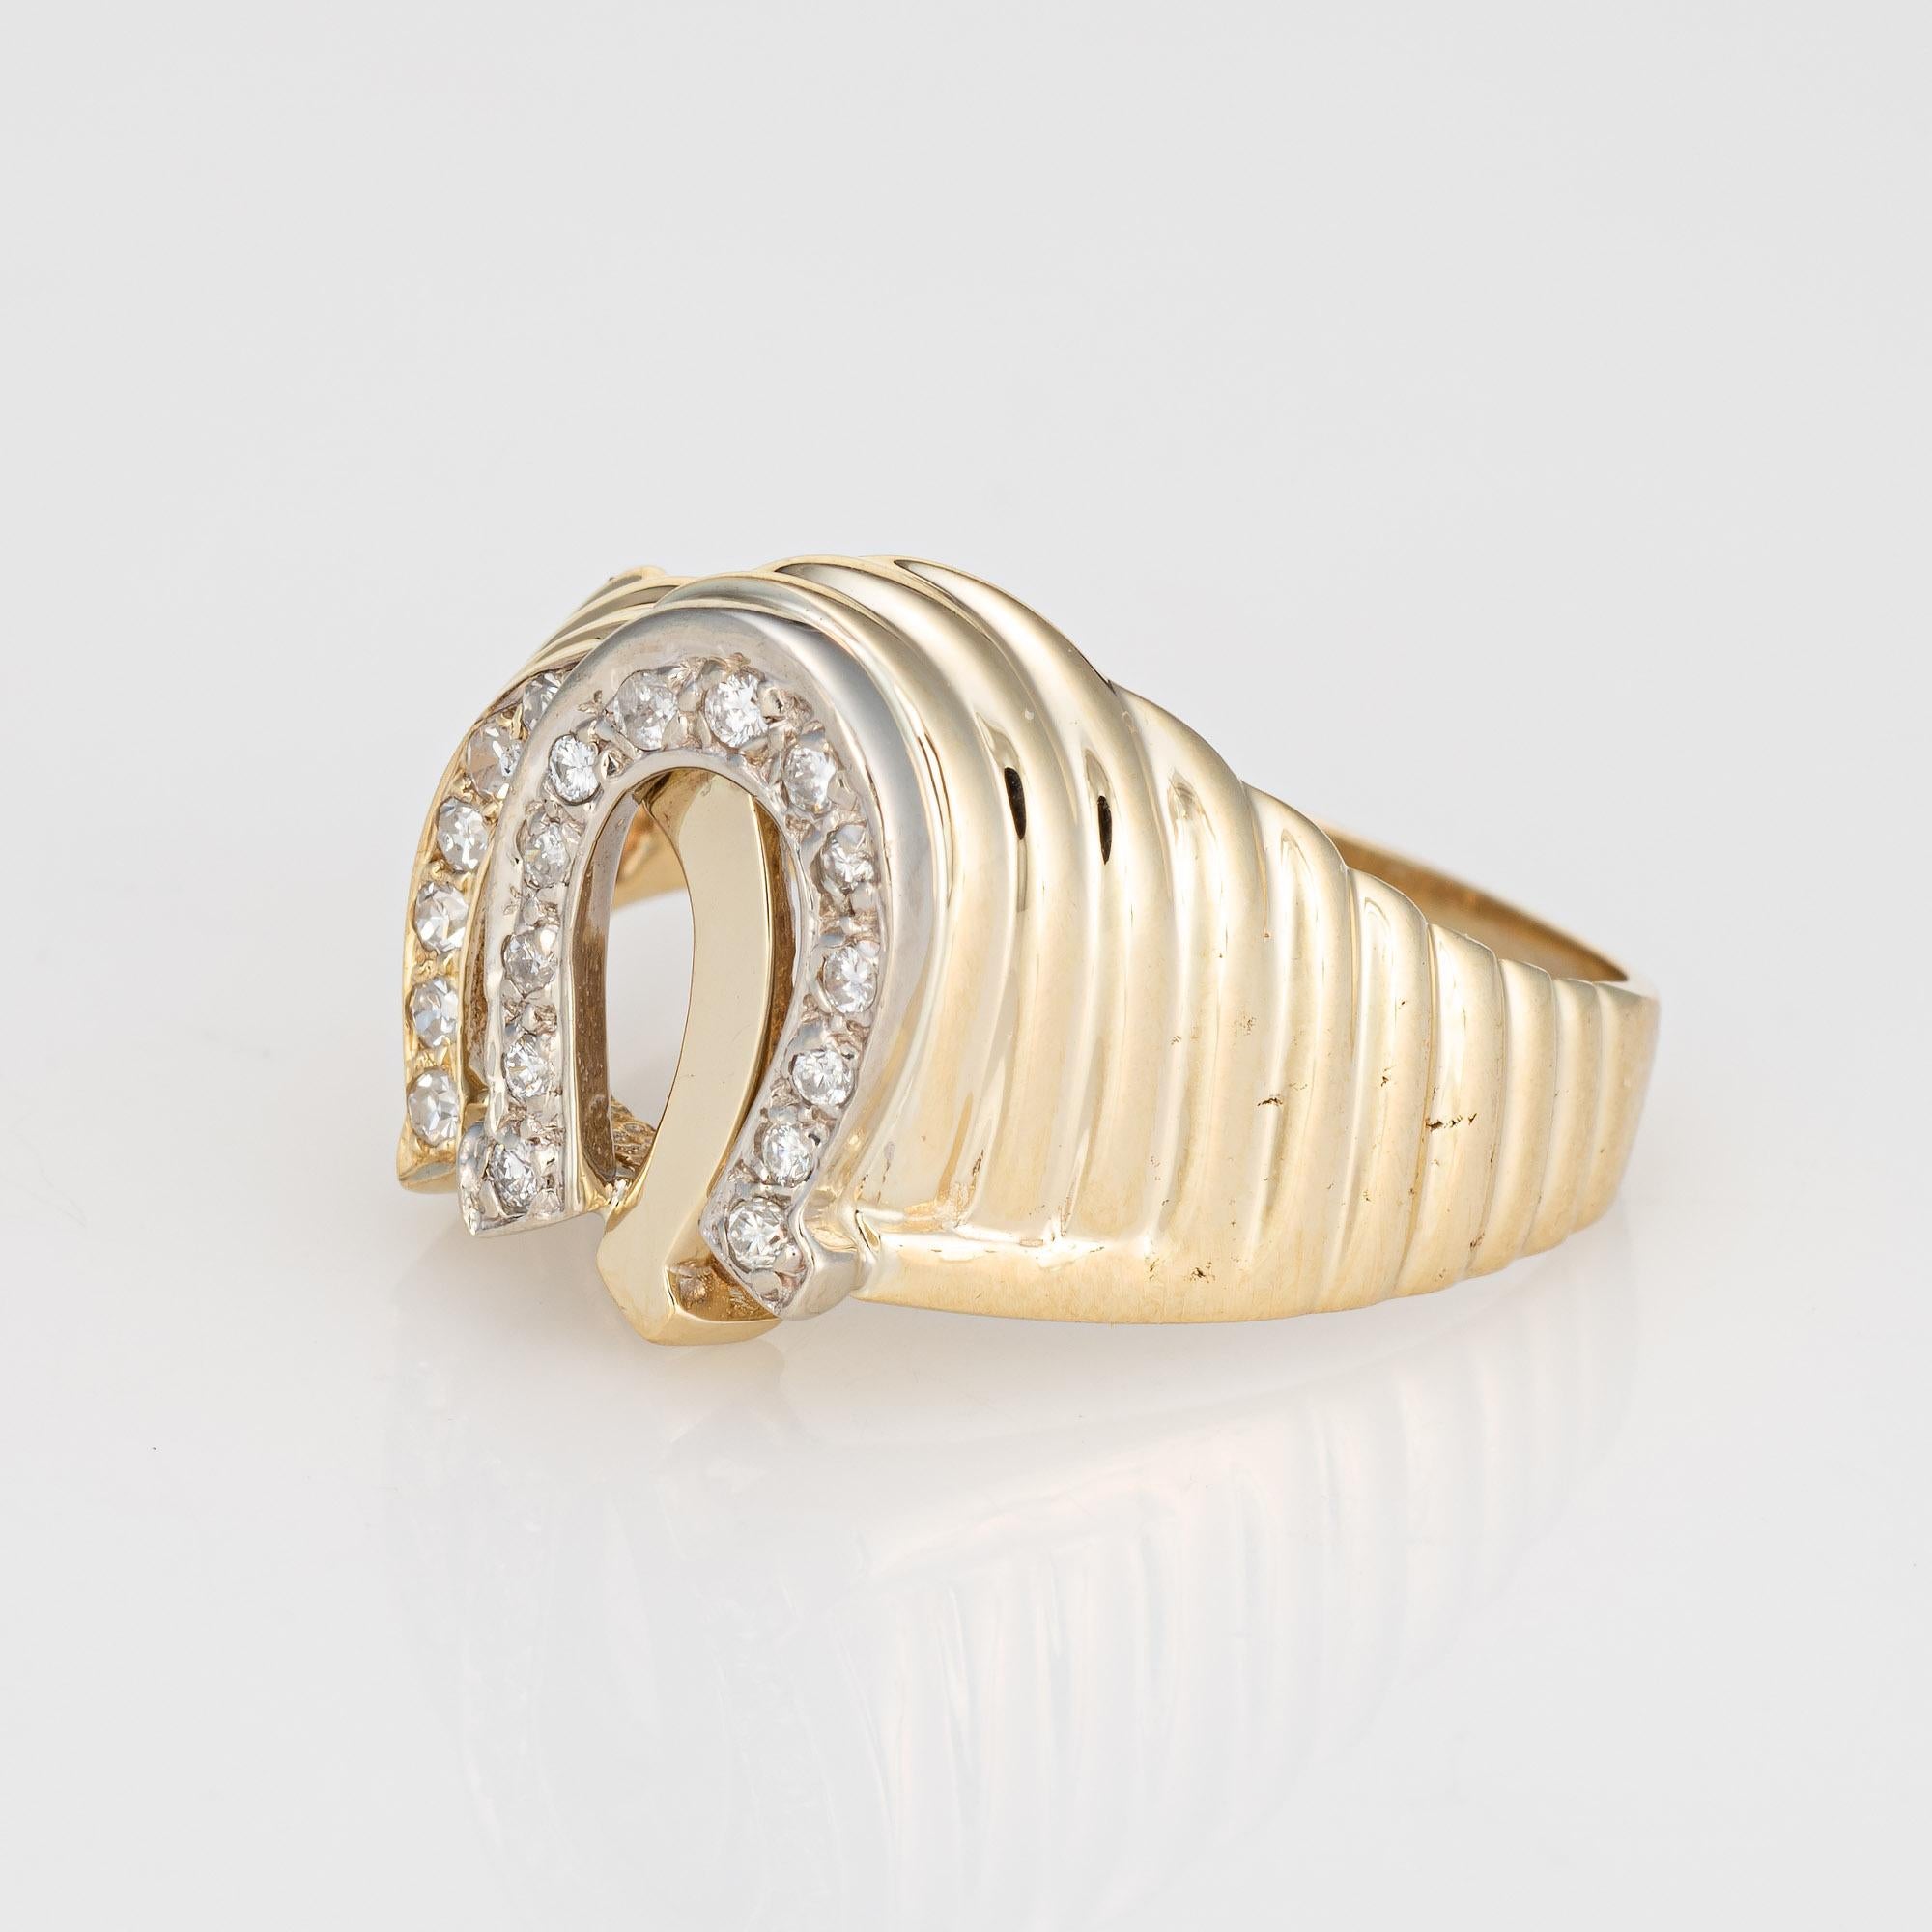 70s jewelry rings